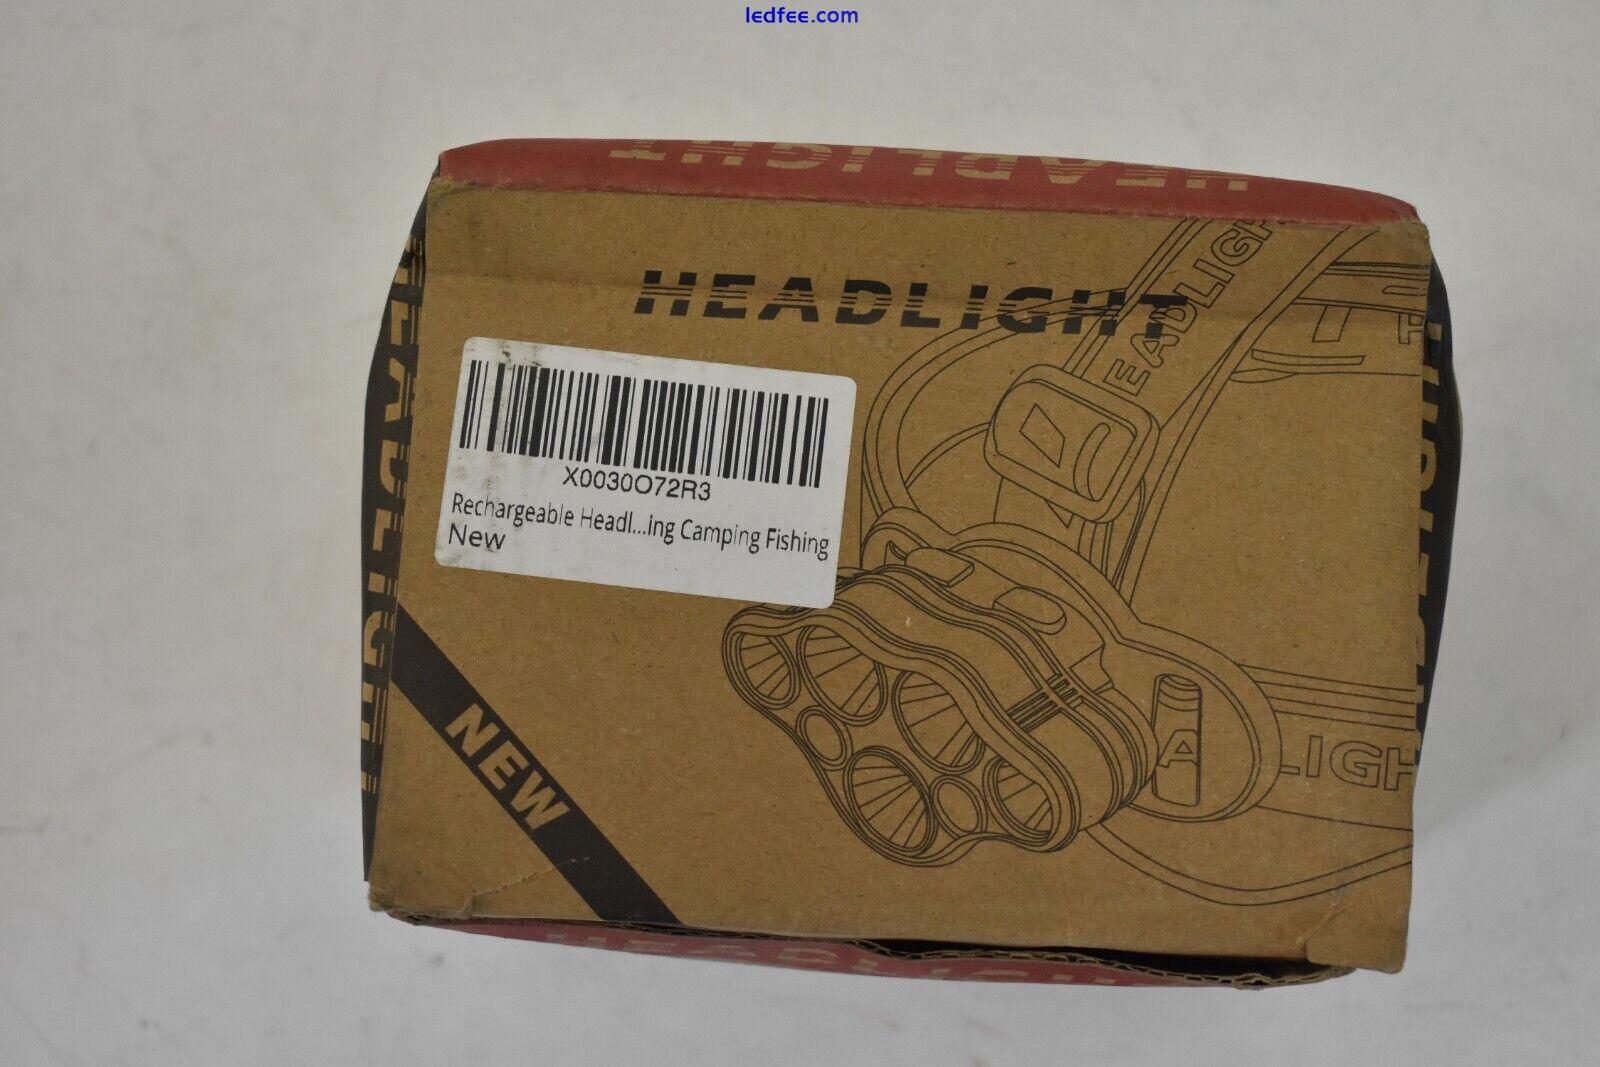 Kwydl Eye Rechargeable Headlamp Headlight Headband Red/Black For Camping Fishing 5 